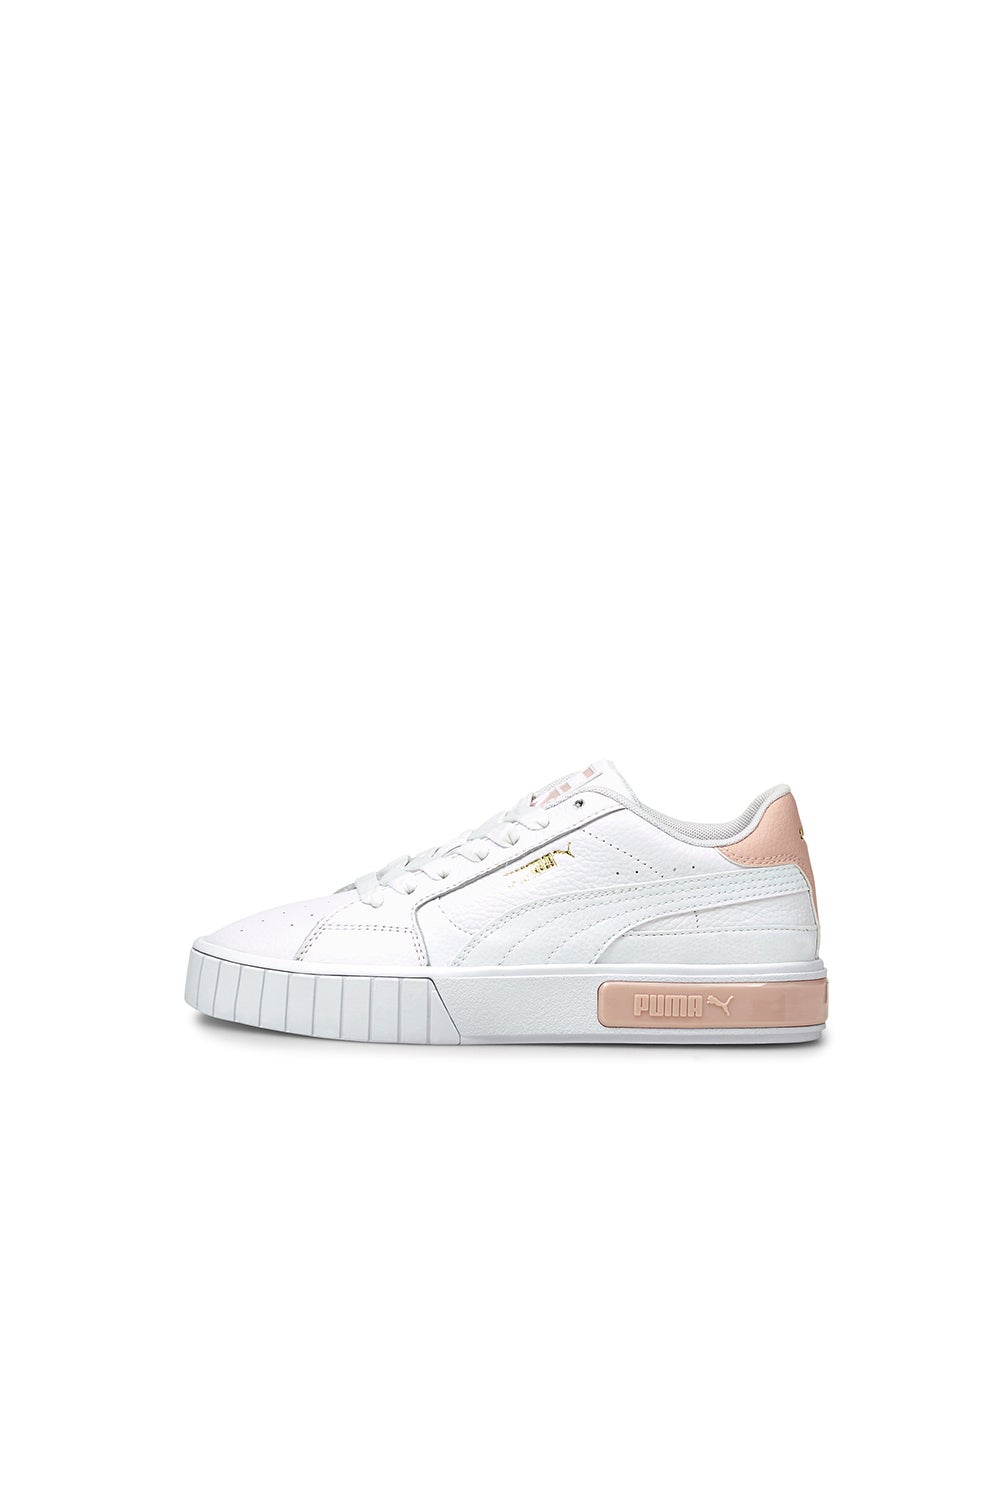 Puma Cali Star Women's Sneakers White/Cloud Pink